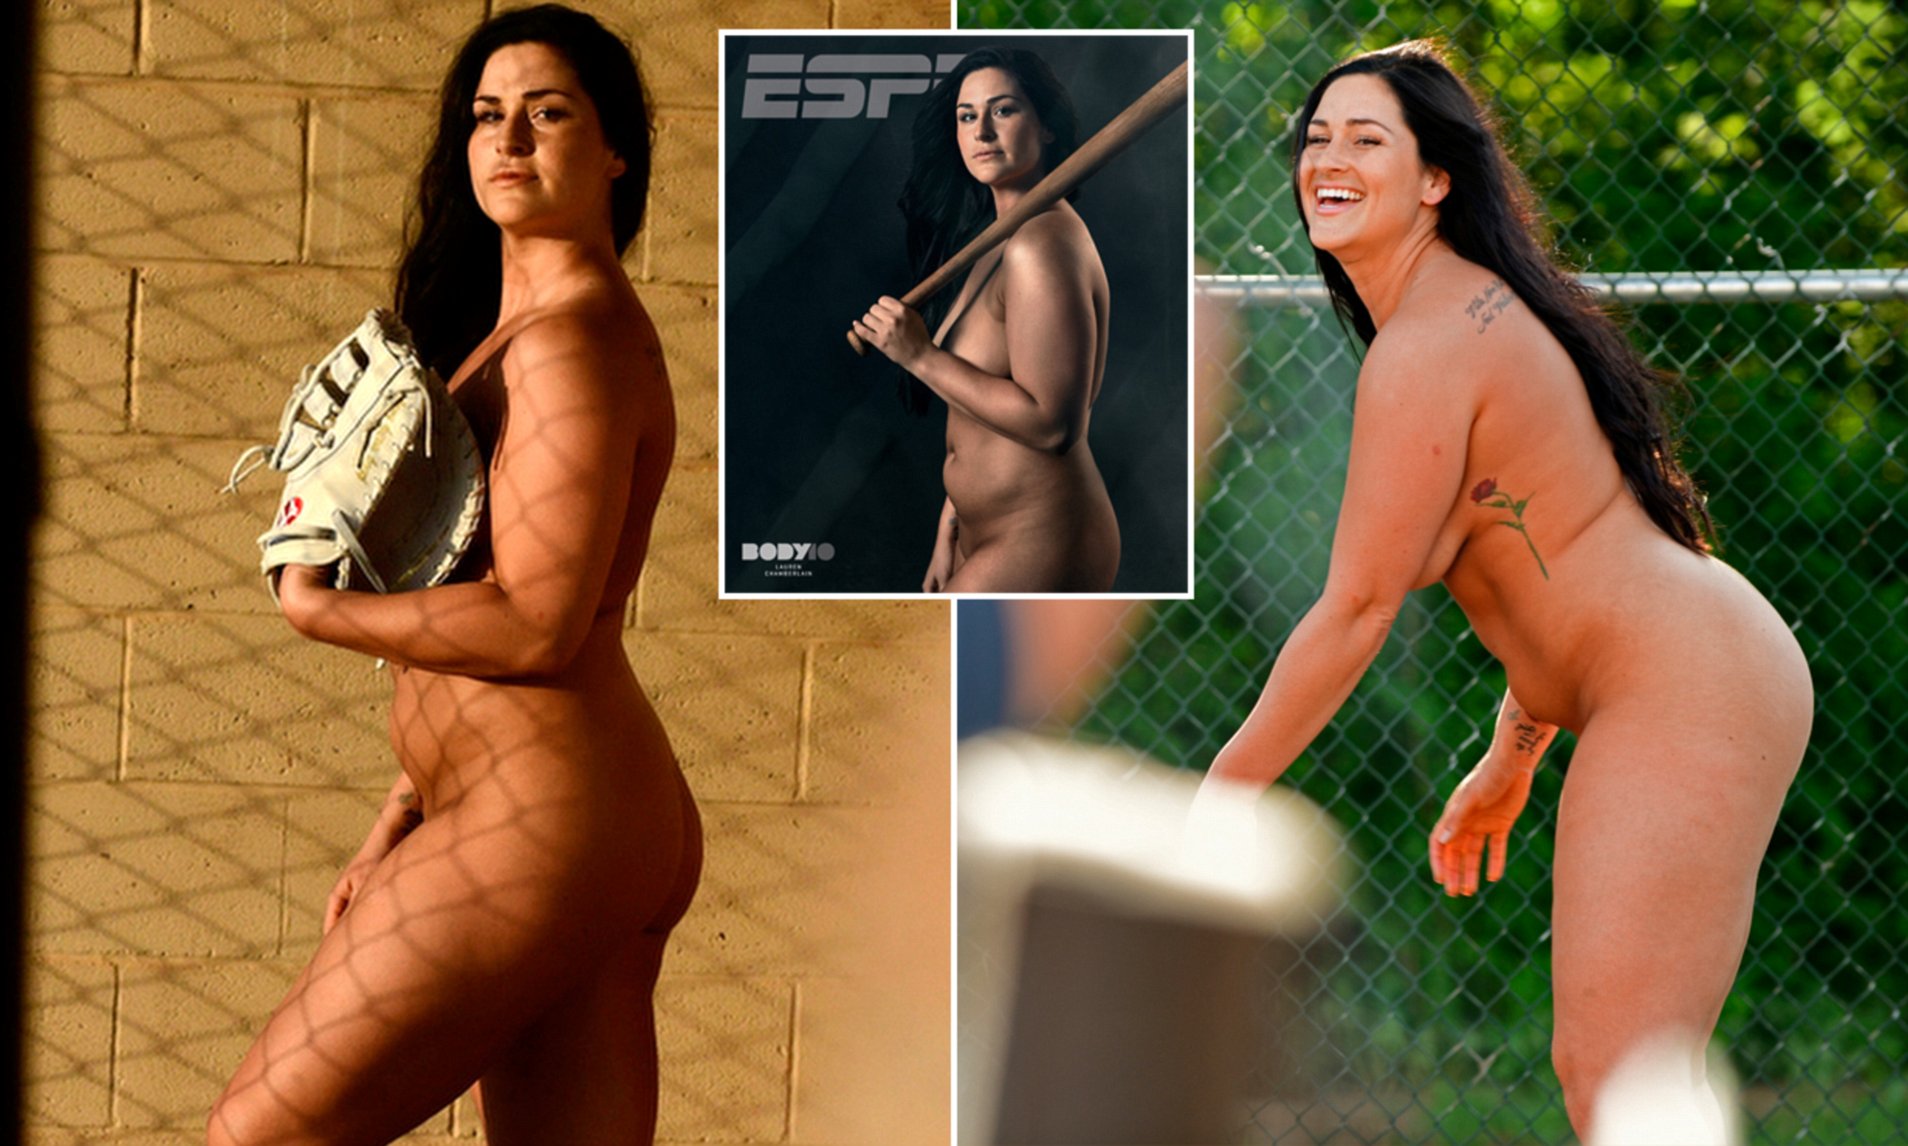 anthony mansoor add nude softball player photo